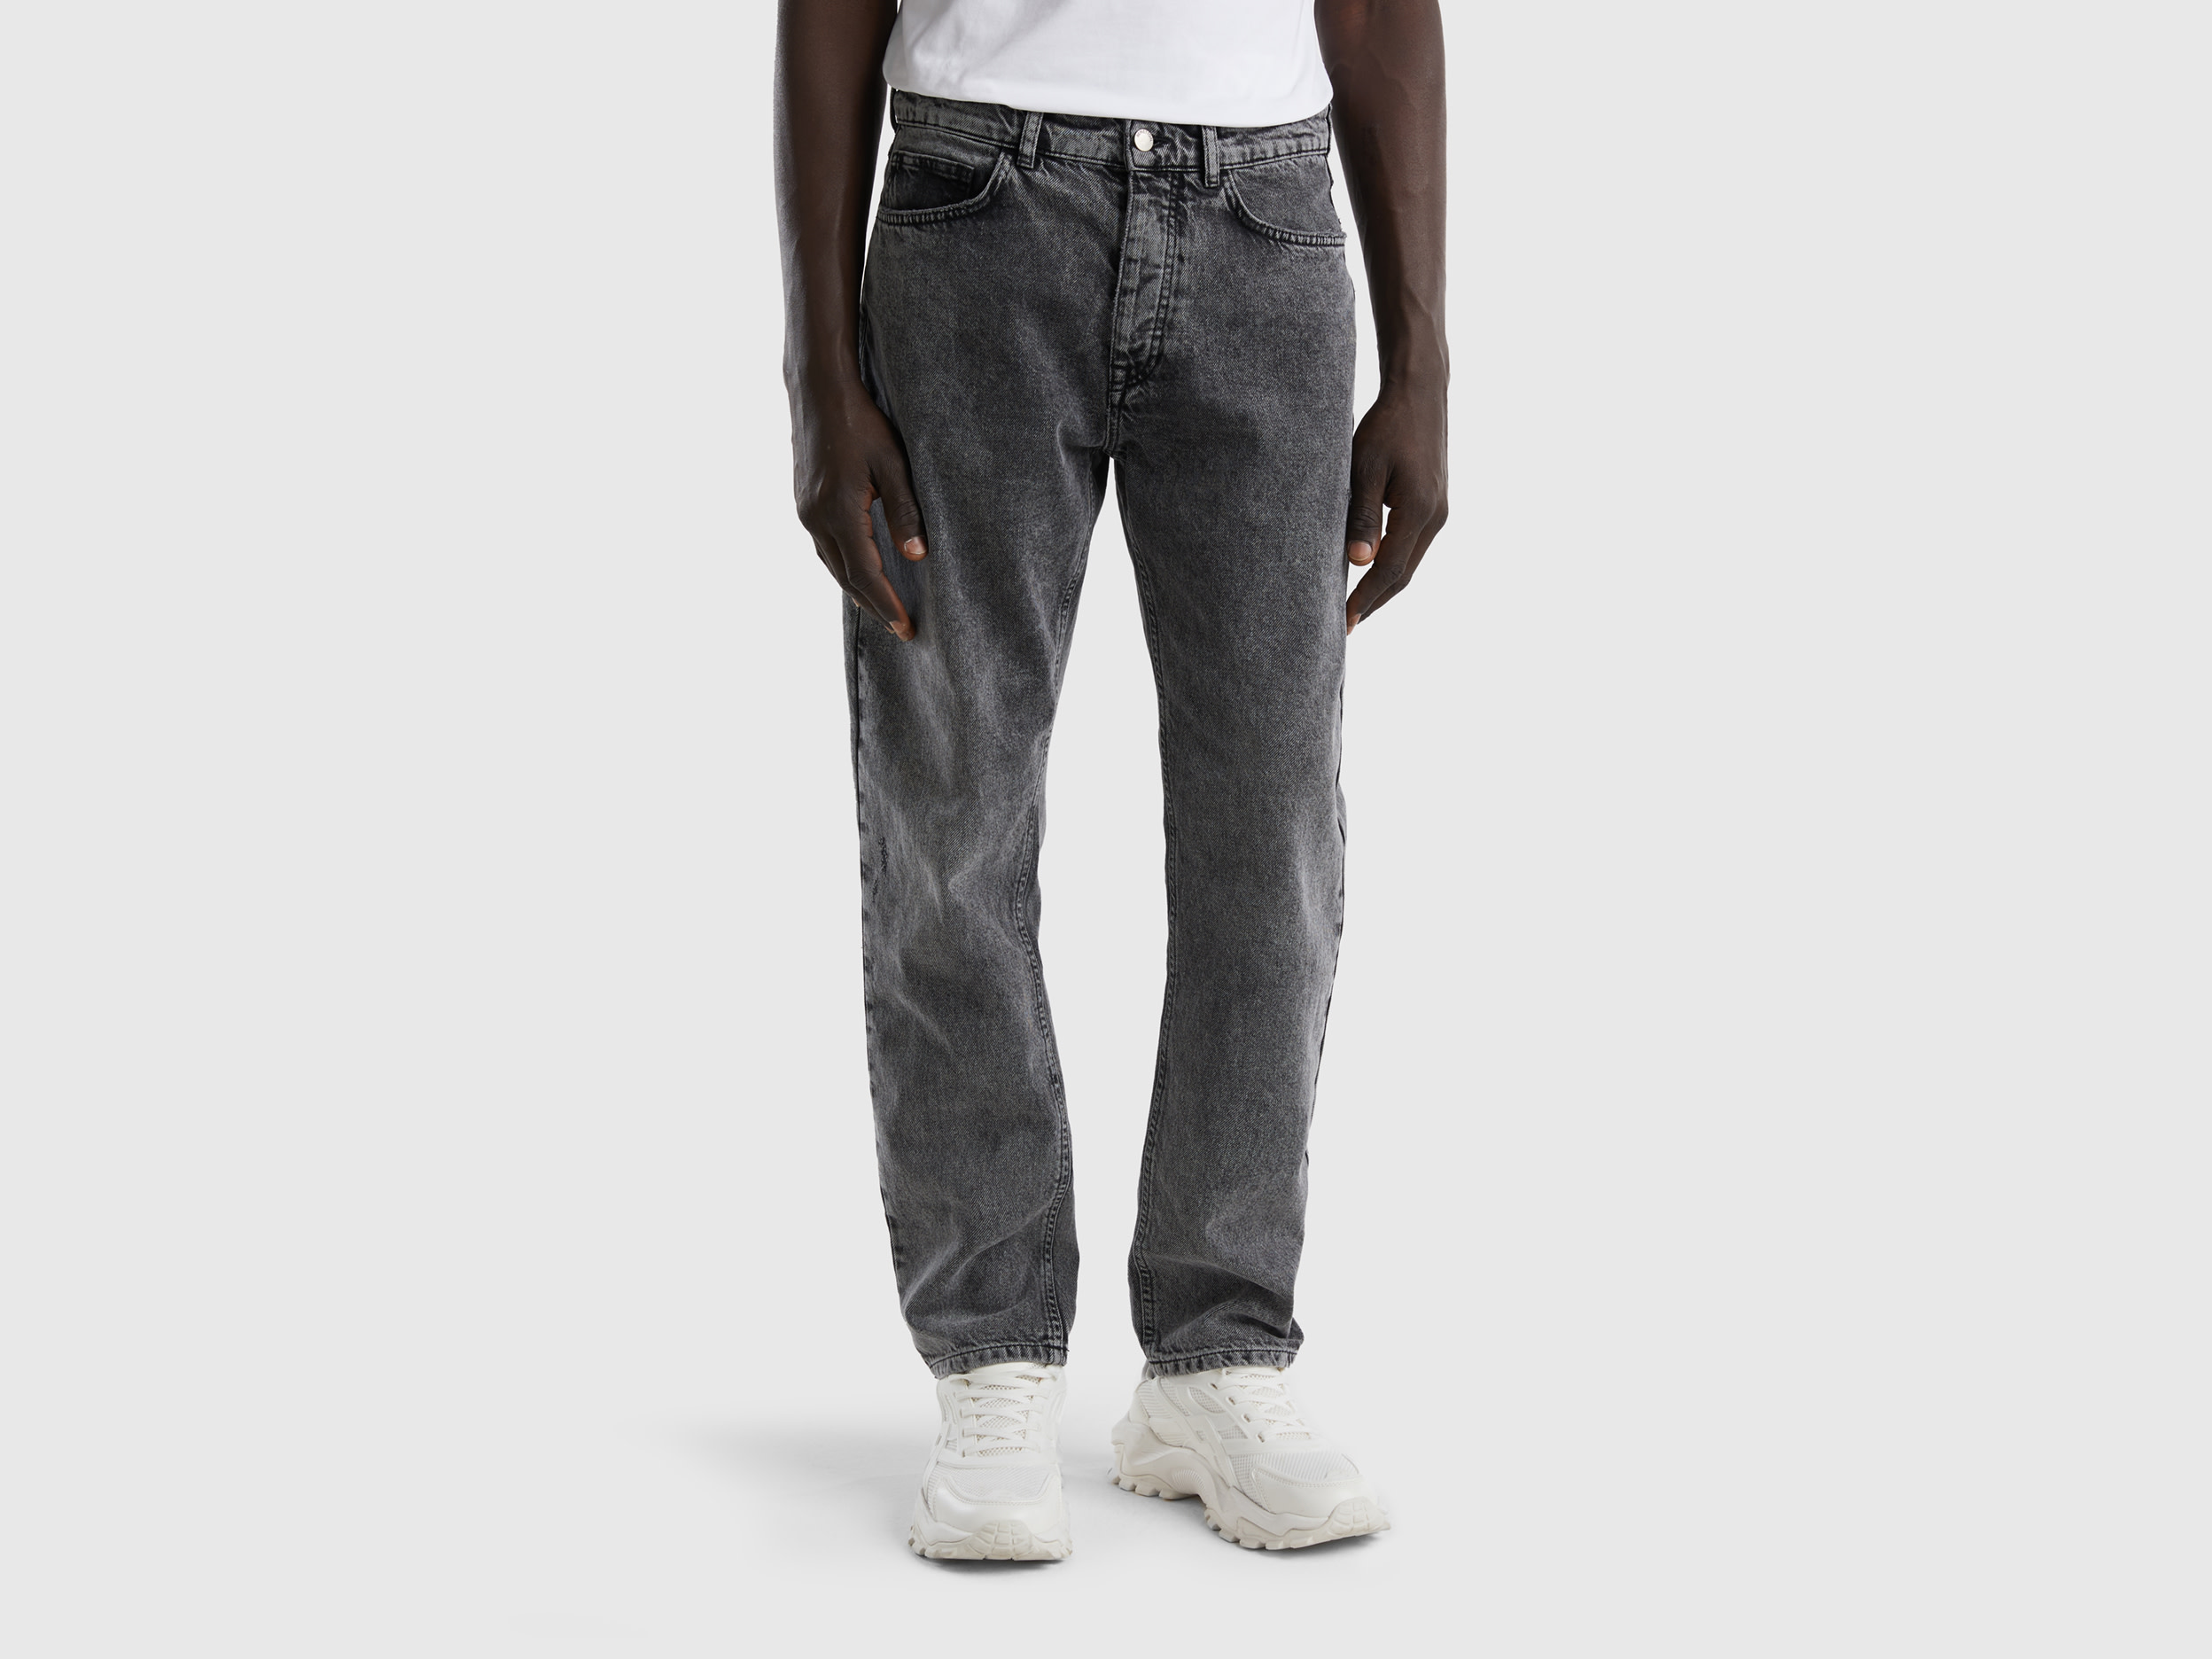 Benetton, Five-pocket Worn Look Jeans, size 35, Black, Men